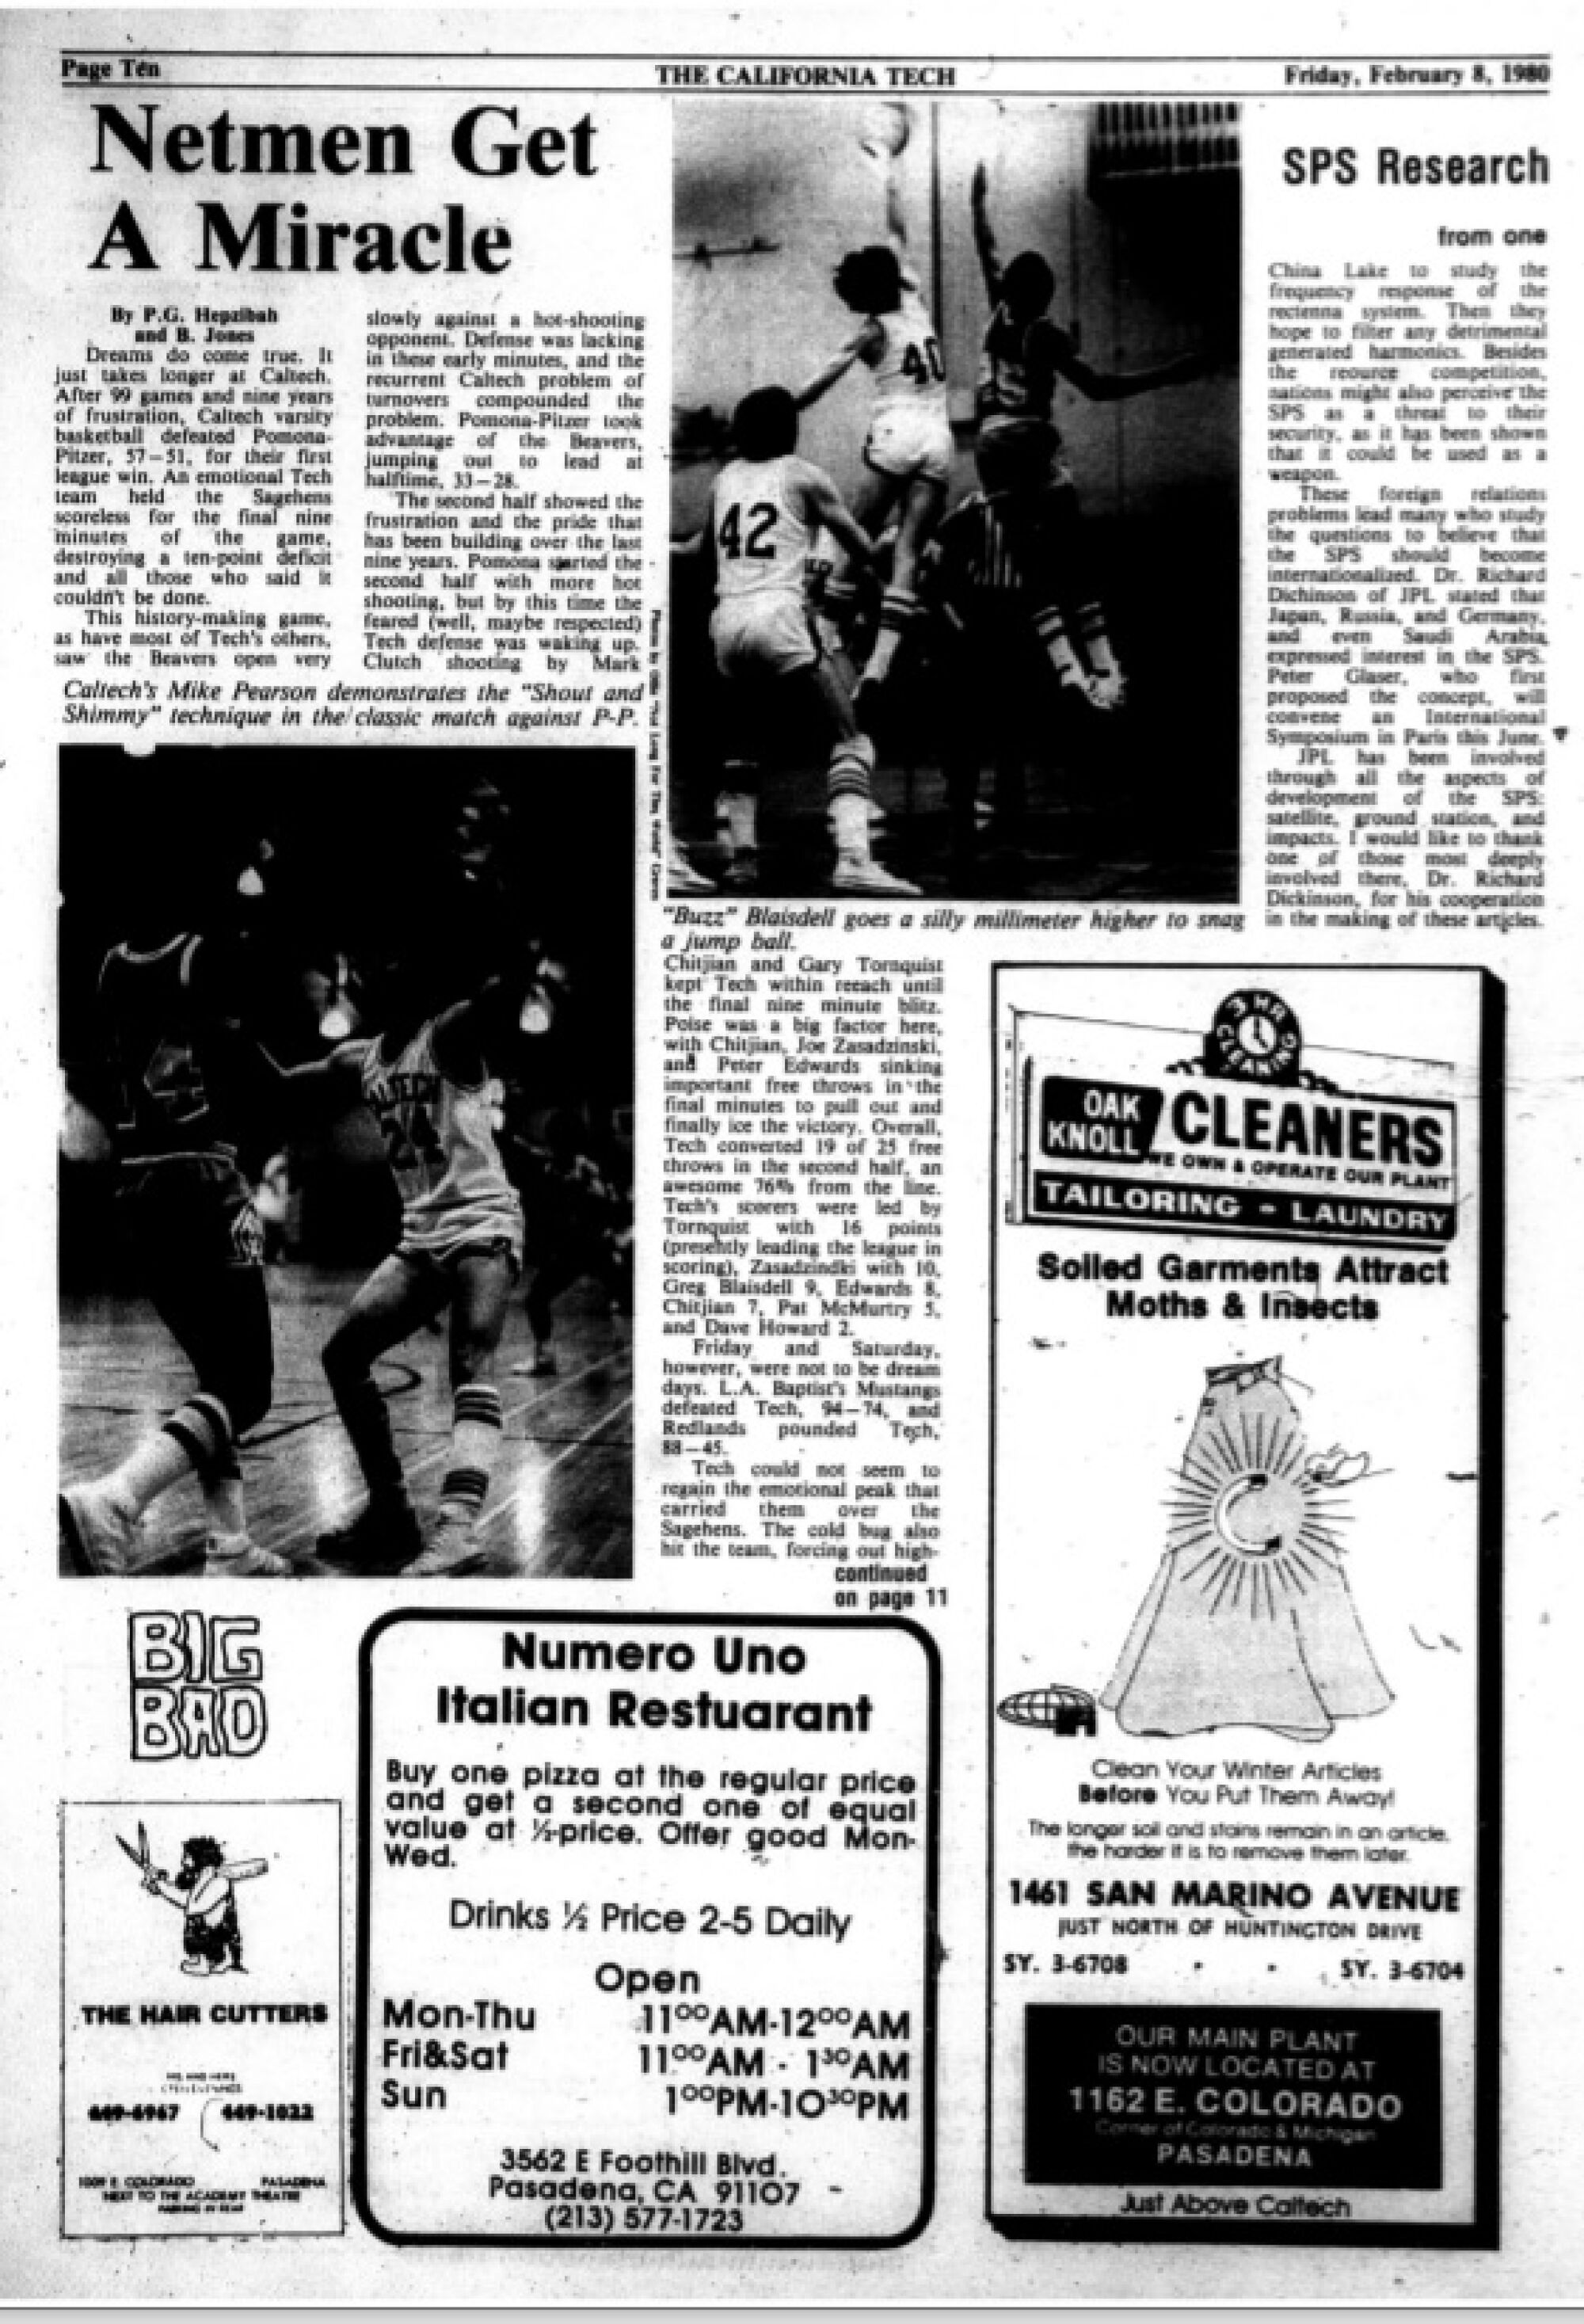 The California Tech newspaper, Feb. 8, 1980.